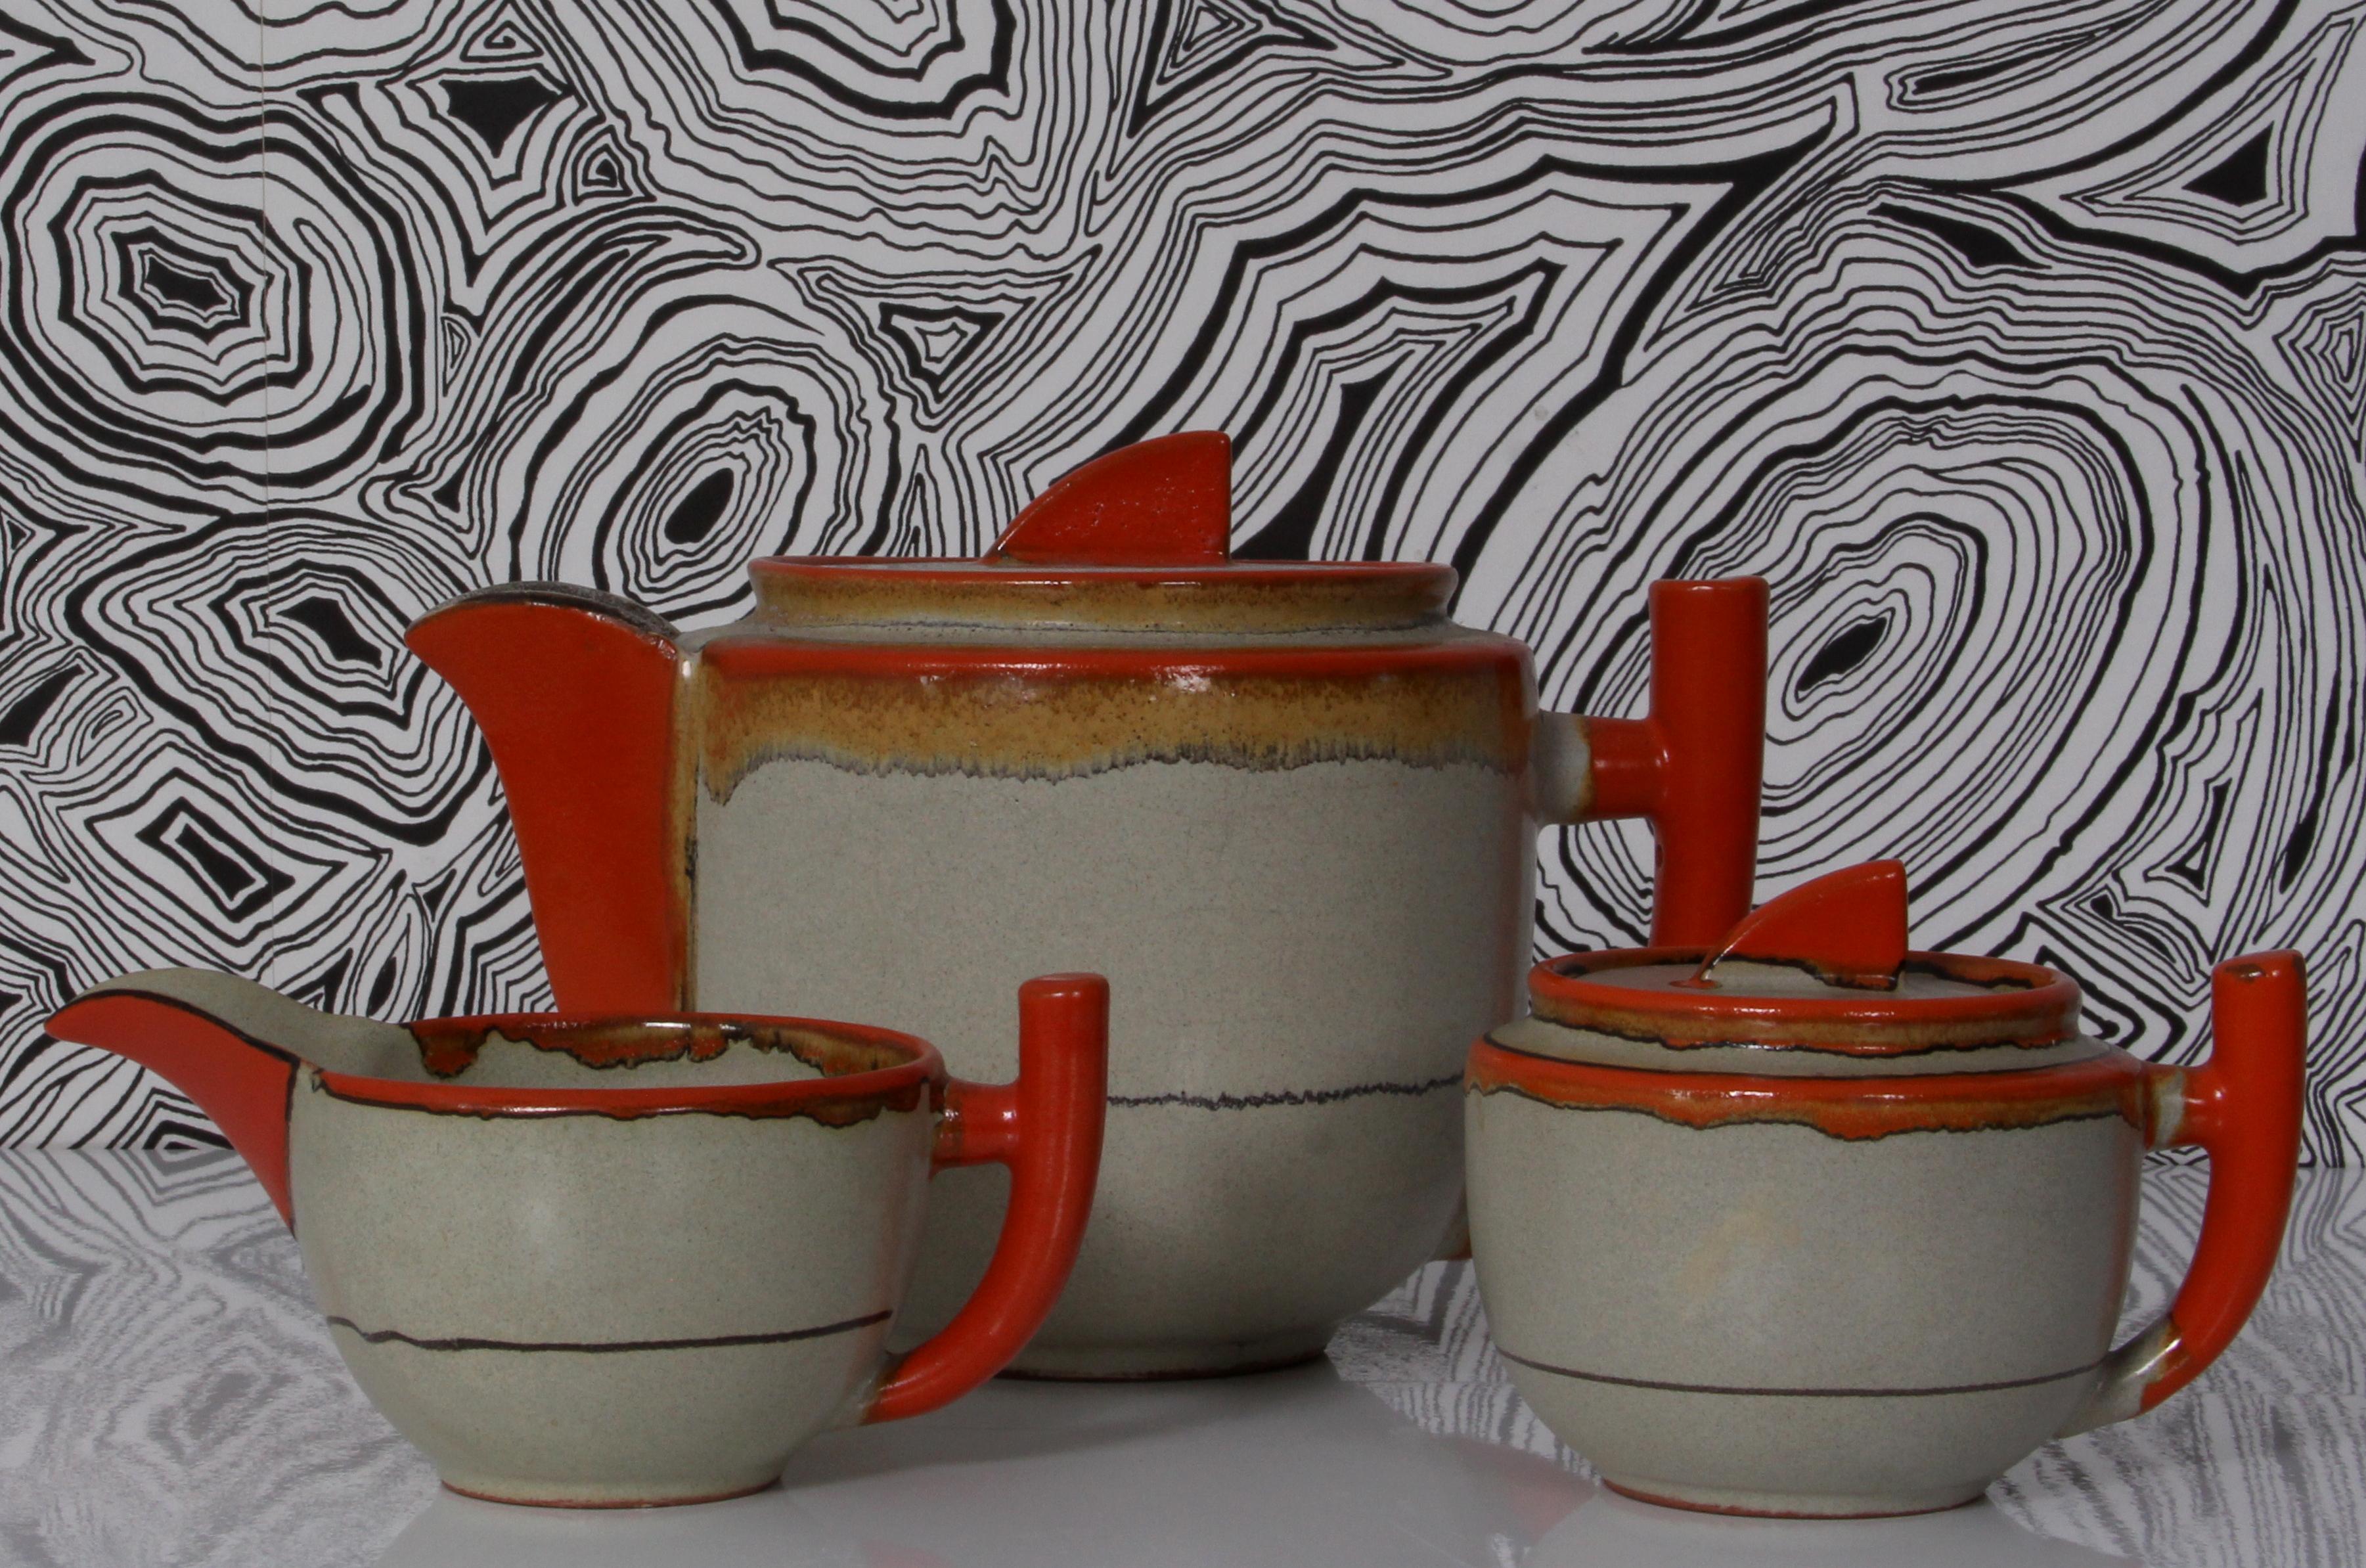 Glazed Art Deco Tea Service by Carstens Uffrecht ar 1930 uranium glaze + cups + plates  For Sale